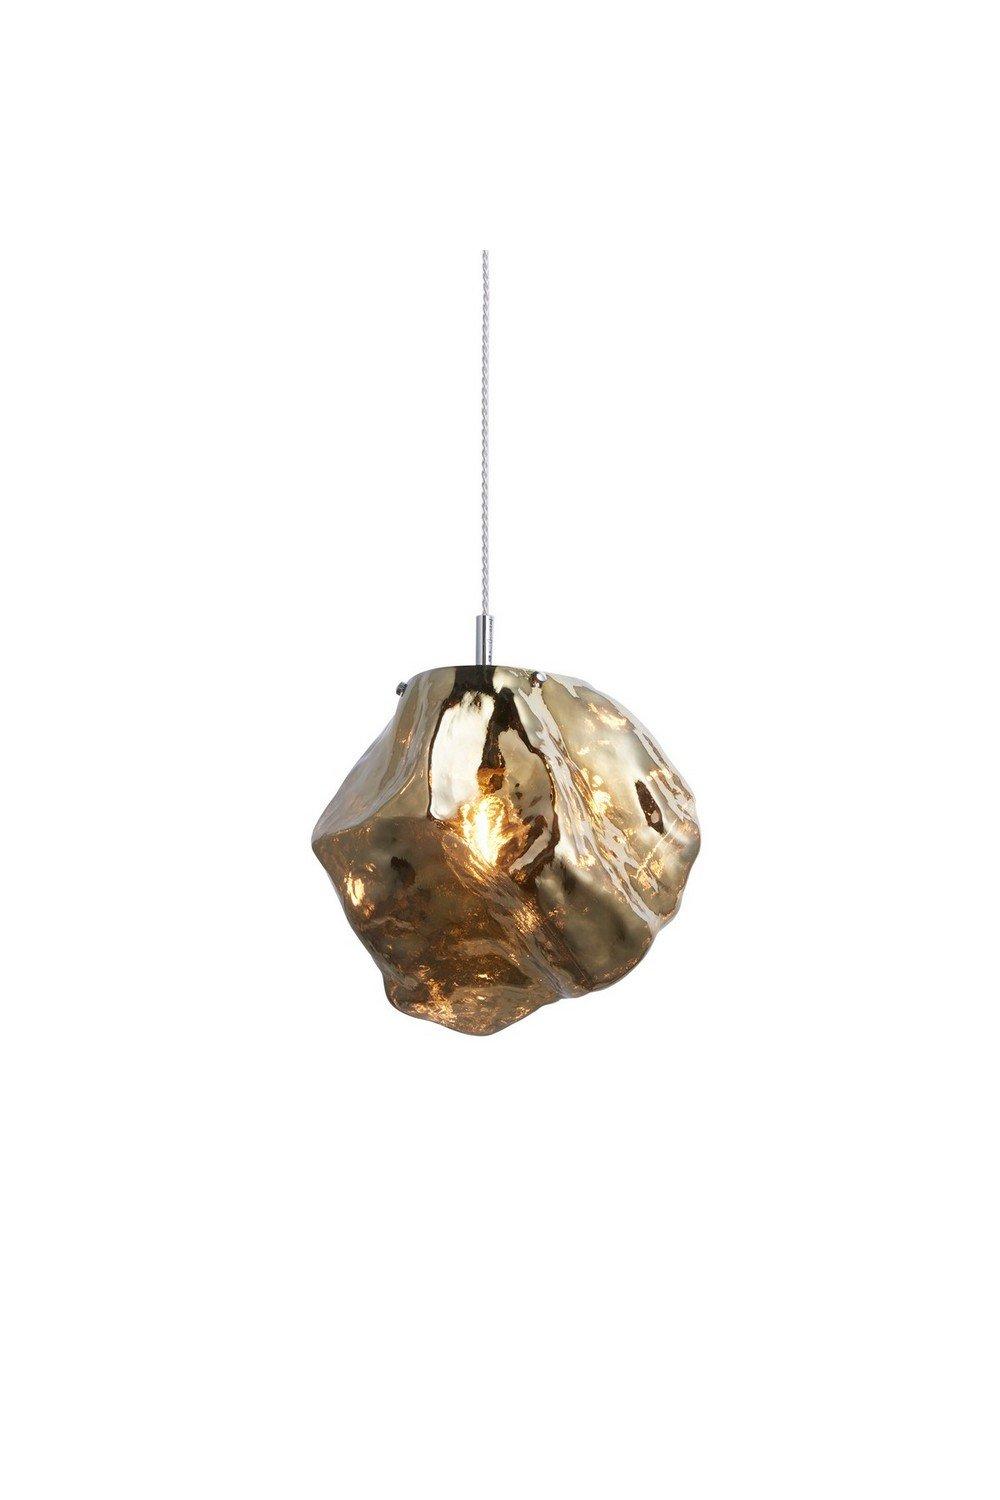 Rock Modern Contemporary Single Pendant Light Metallic Bronze Glass Shade Chrome Plated